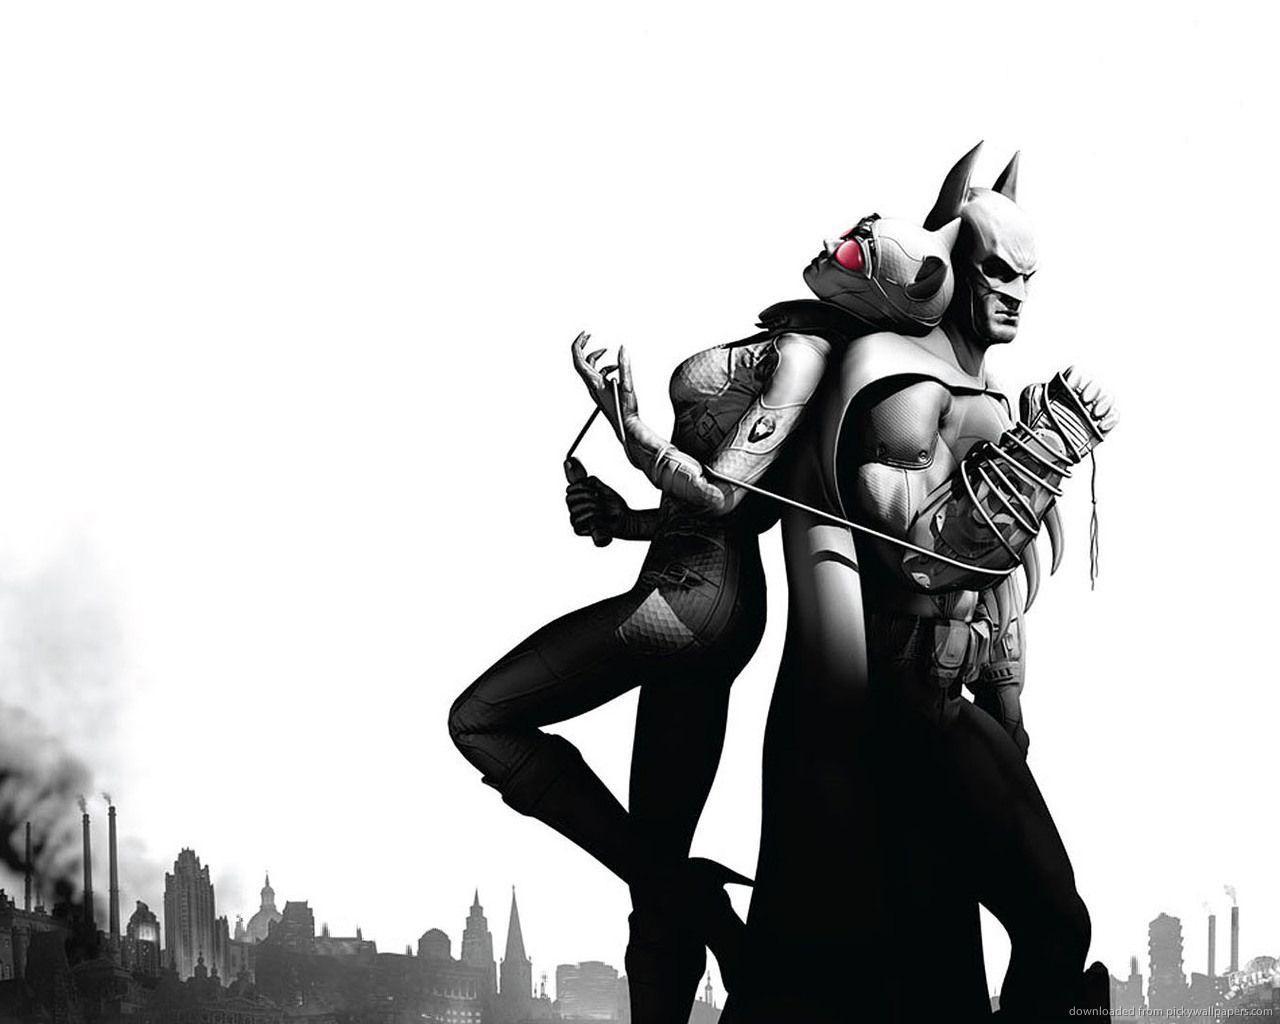 Download 1280x1024 Arkham City Batman With Catwoman Wallpaper